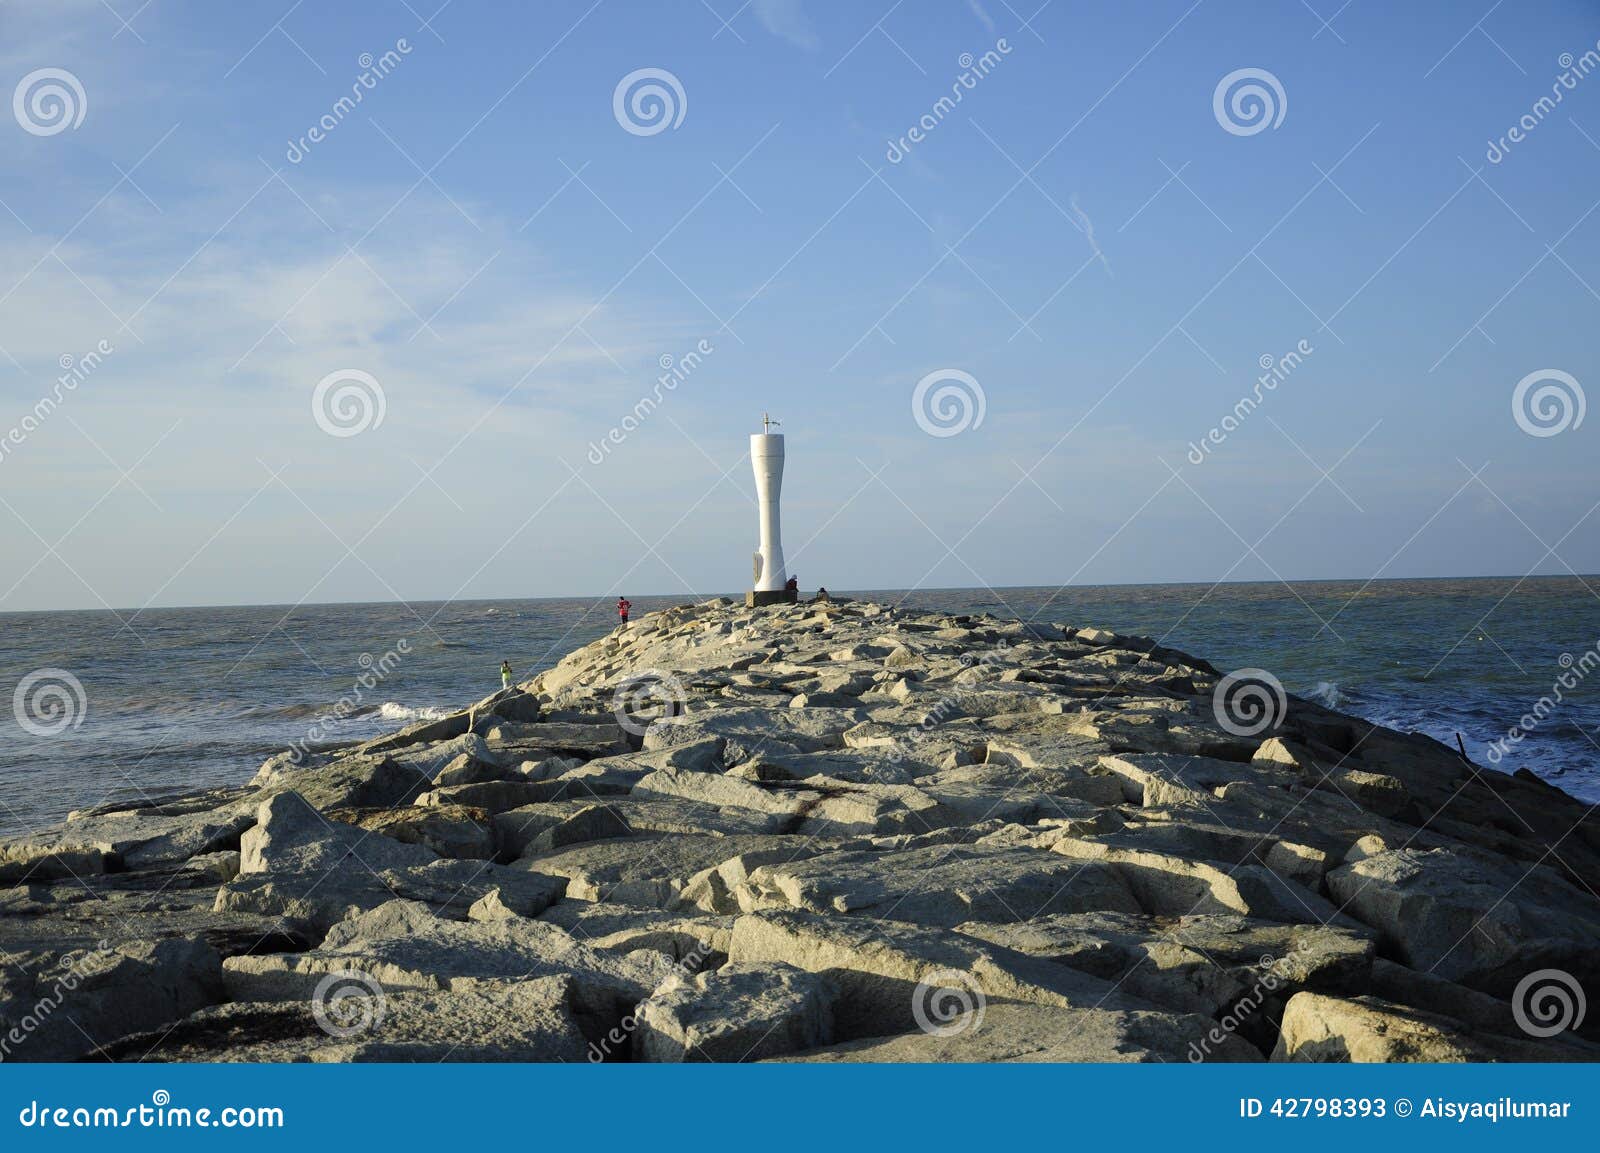 a lighthouse at bachok, kelantan